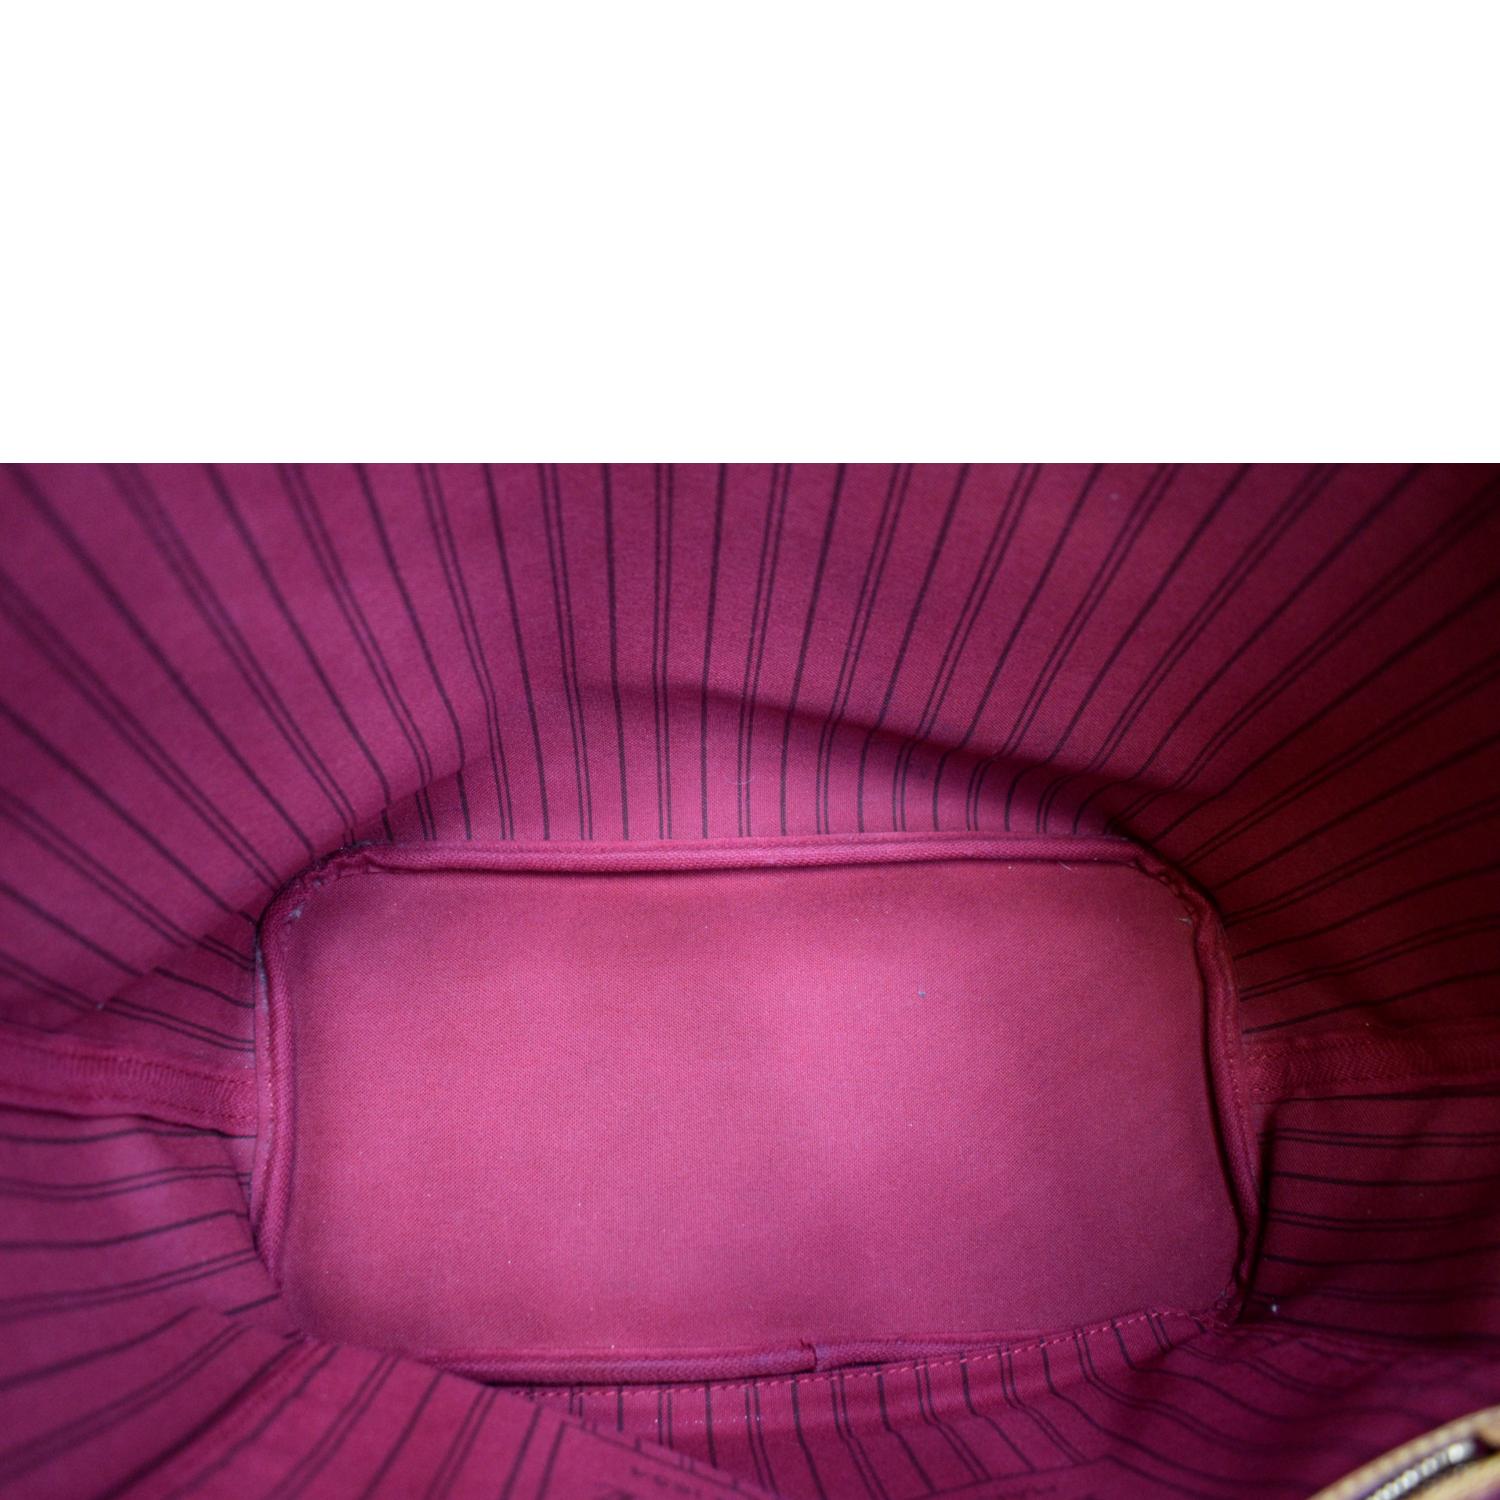 Louis Vuitton Neverfull Monogram MM Tote Bag - Pivoine Pink